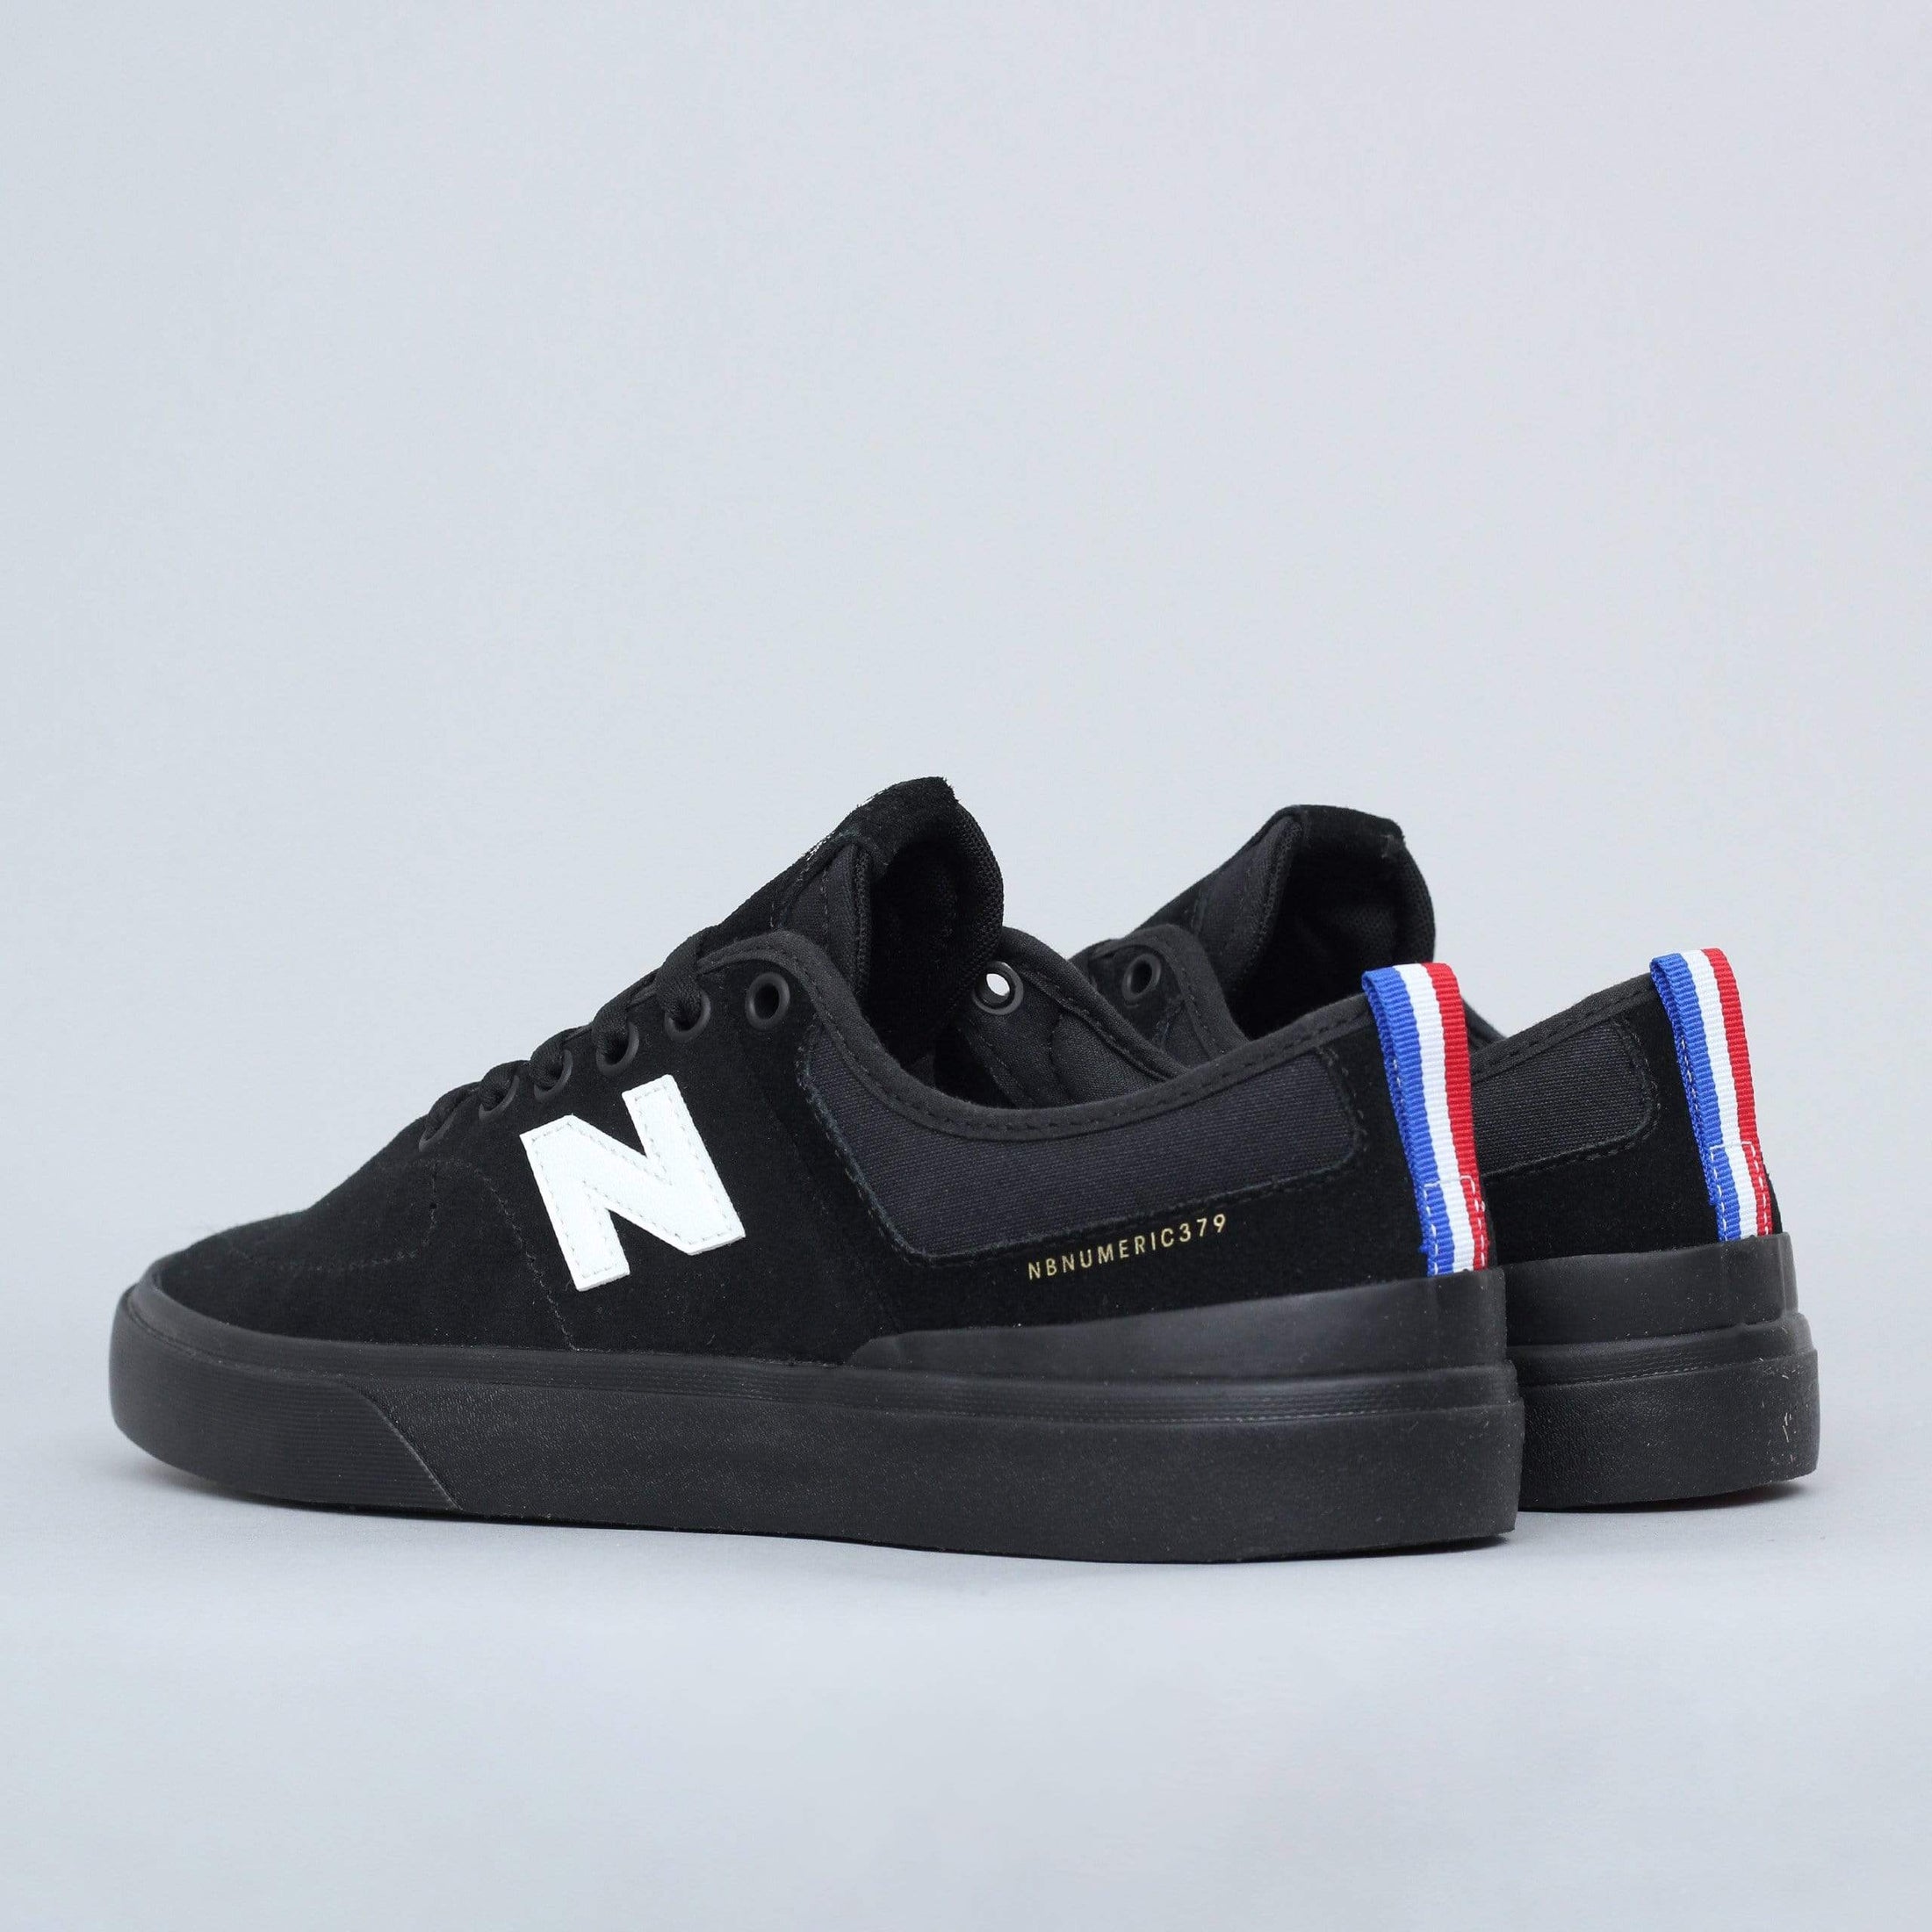 New Balance NM379 Shoes Black / White - Flo Mirtain